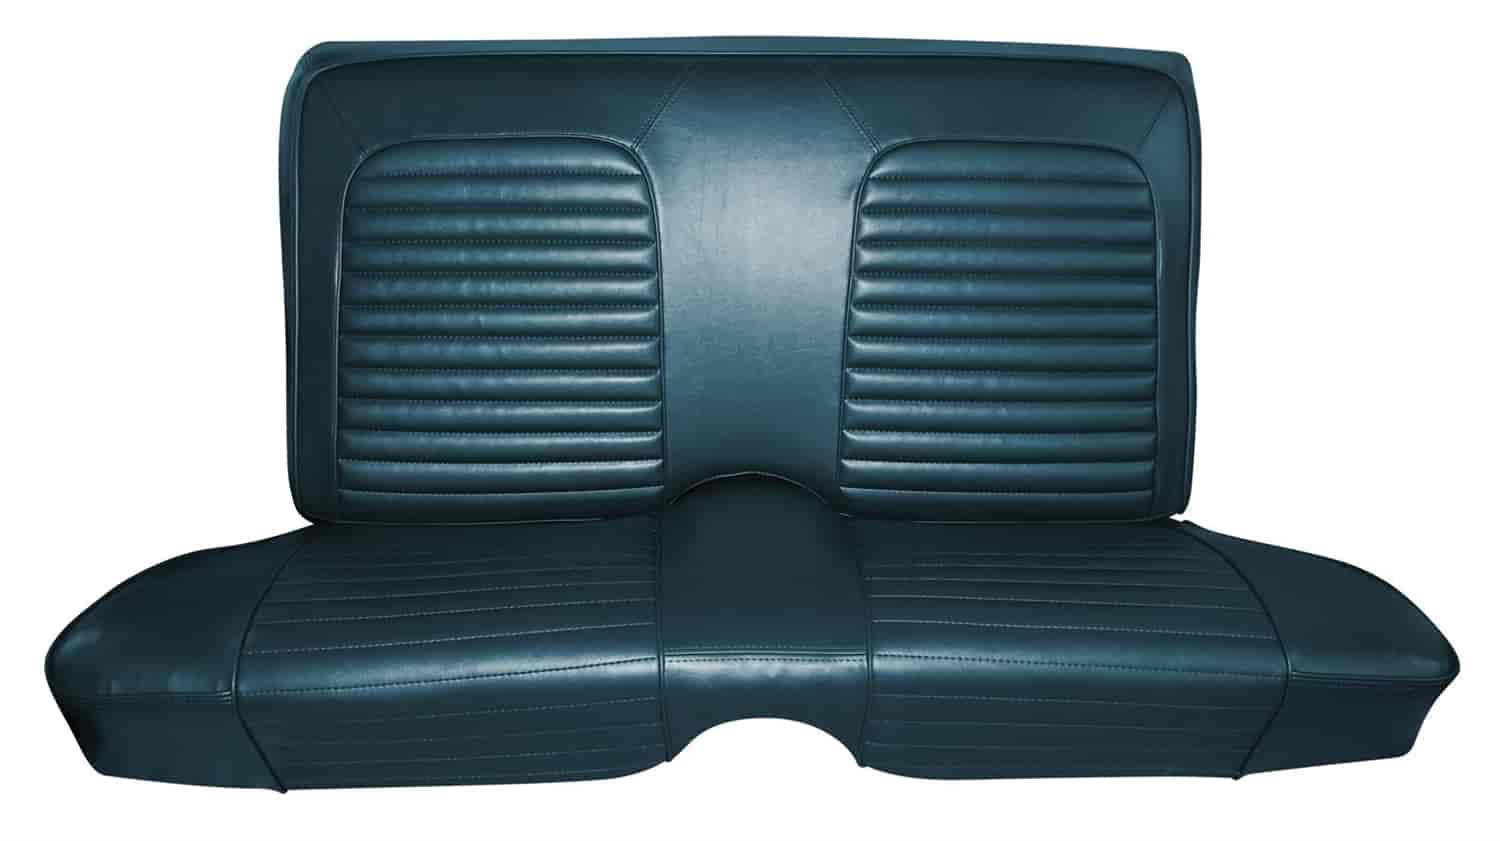 1965 Ford Falcon Futura 2-Door Hardtop Interior Front Bucket and Rear Bench Seat Upholstery Set